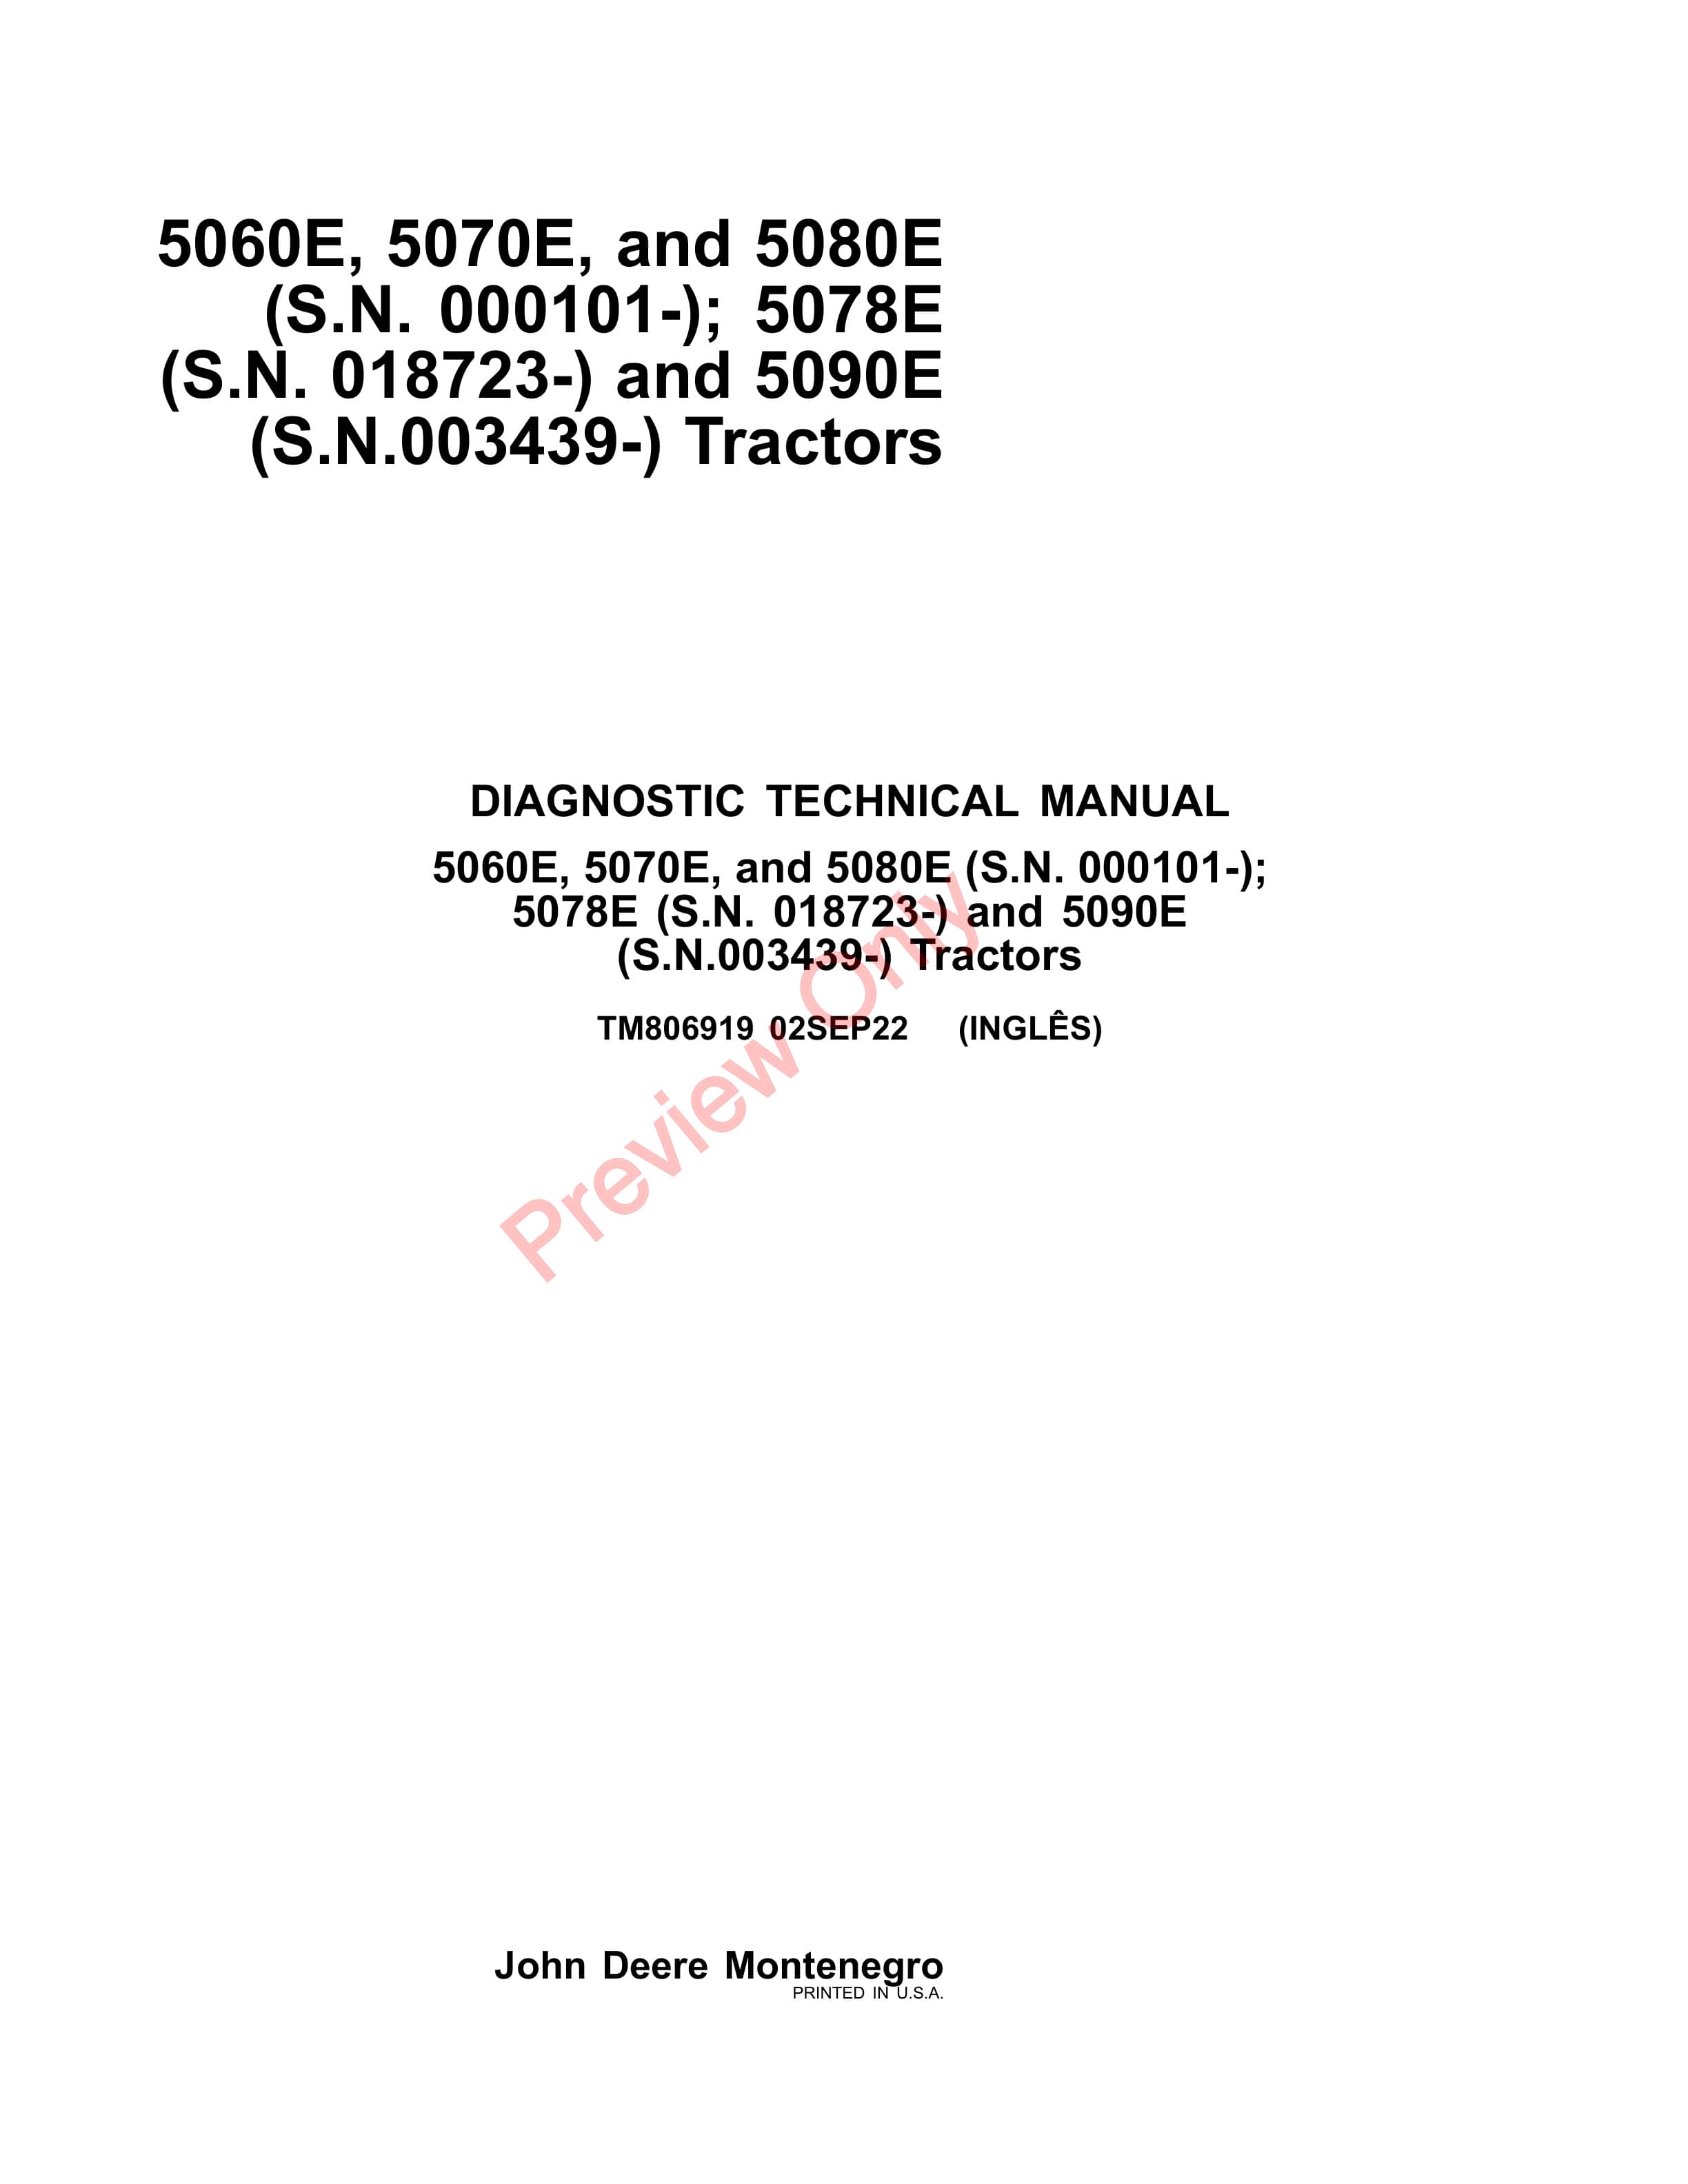 John Deere 5060E 5070E and 5080E 000101 Diagnostic Technical Manual TM806919 02SEP22 1